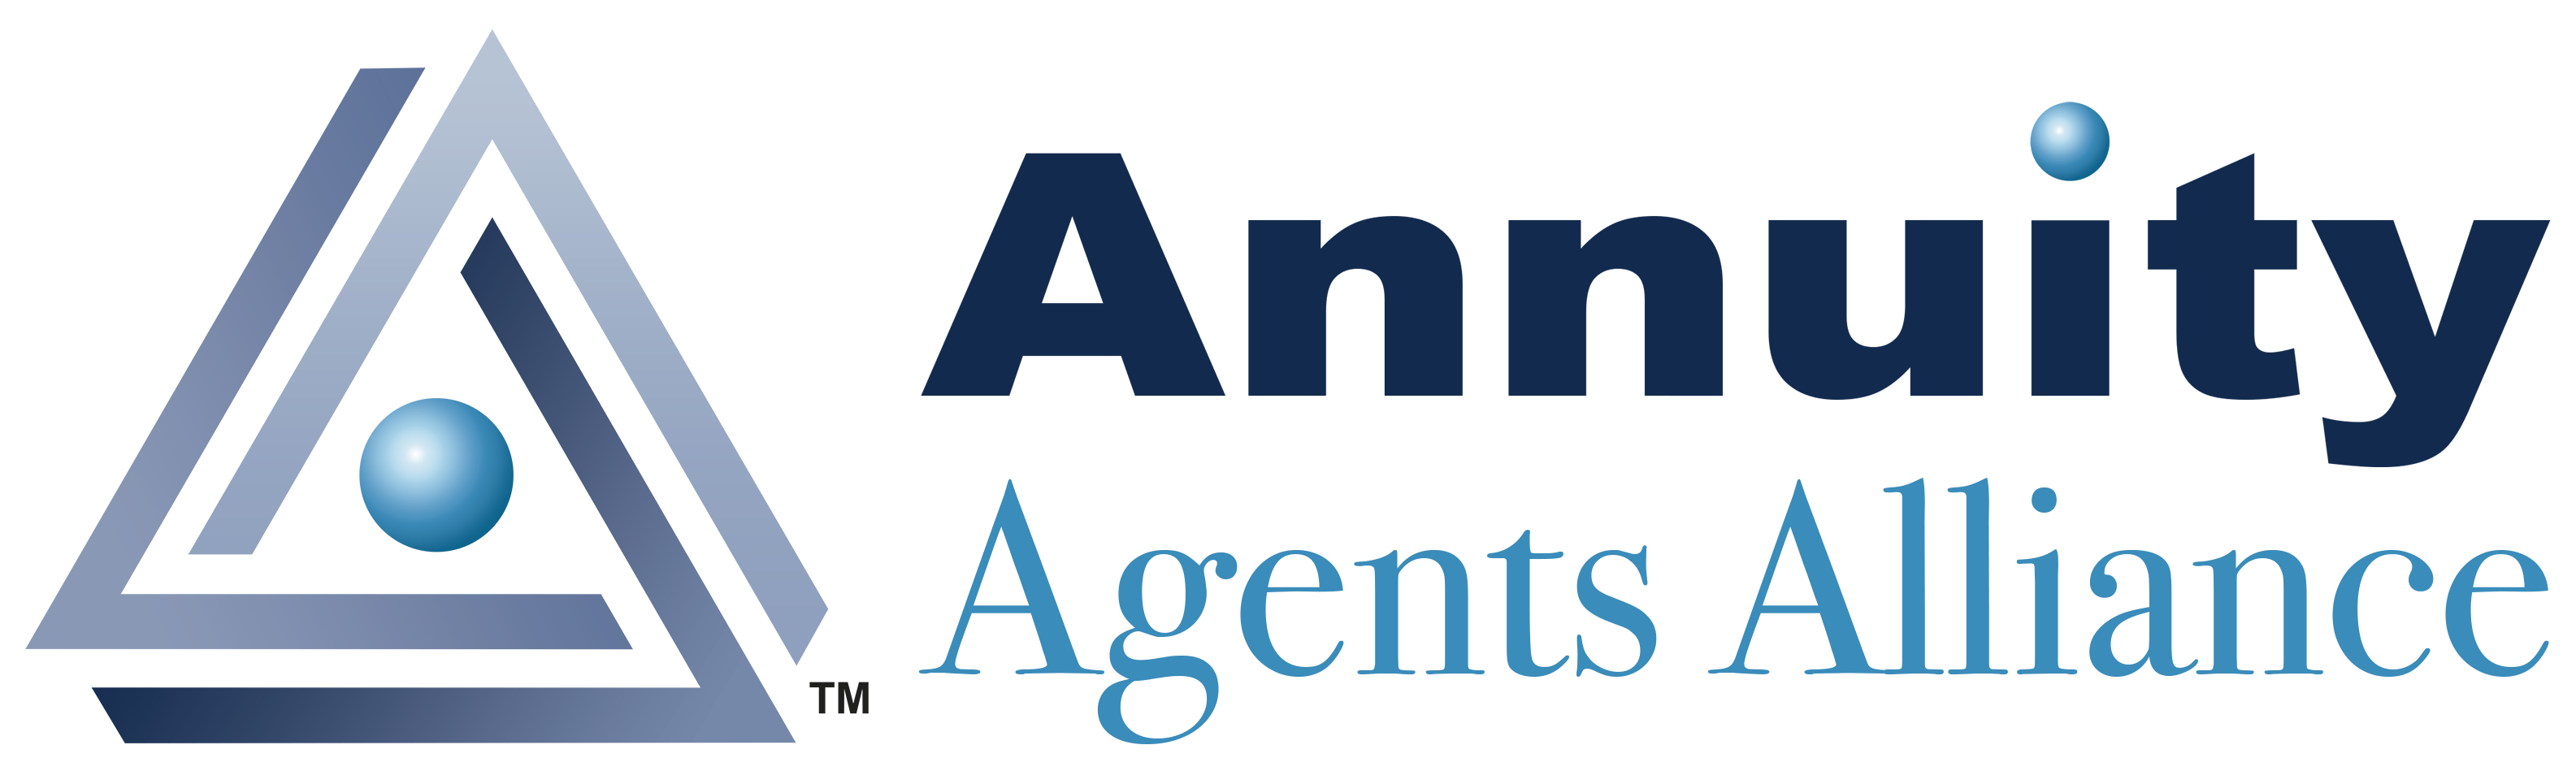 Annuity Agents Alliance logo